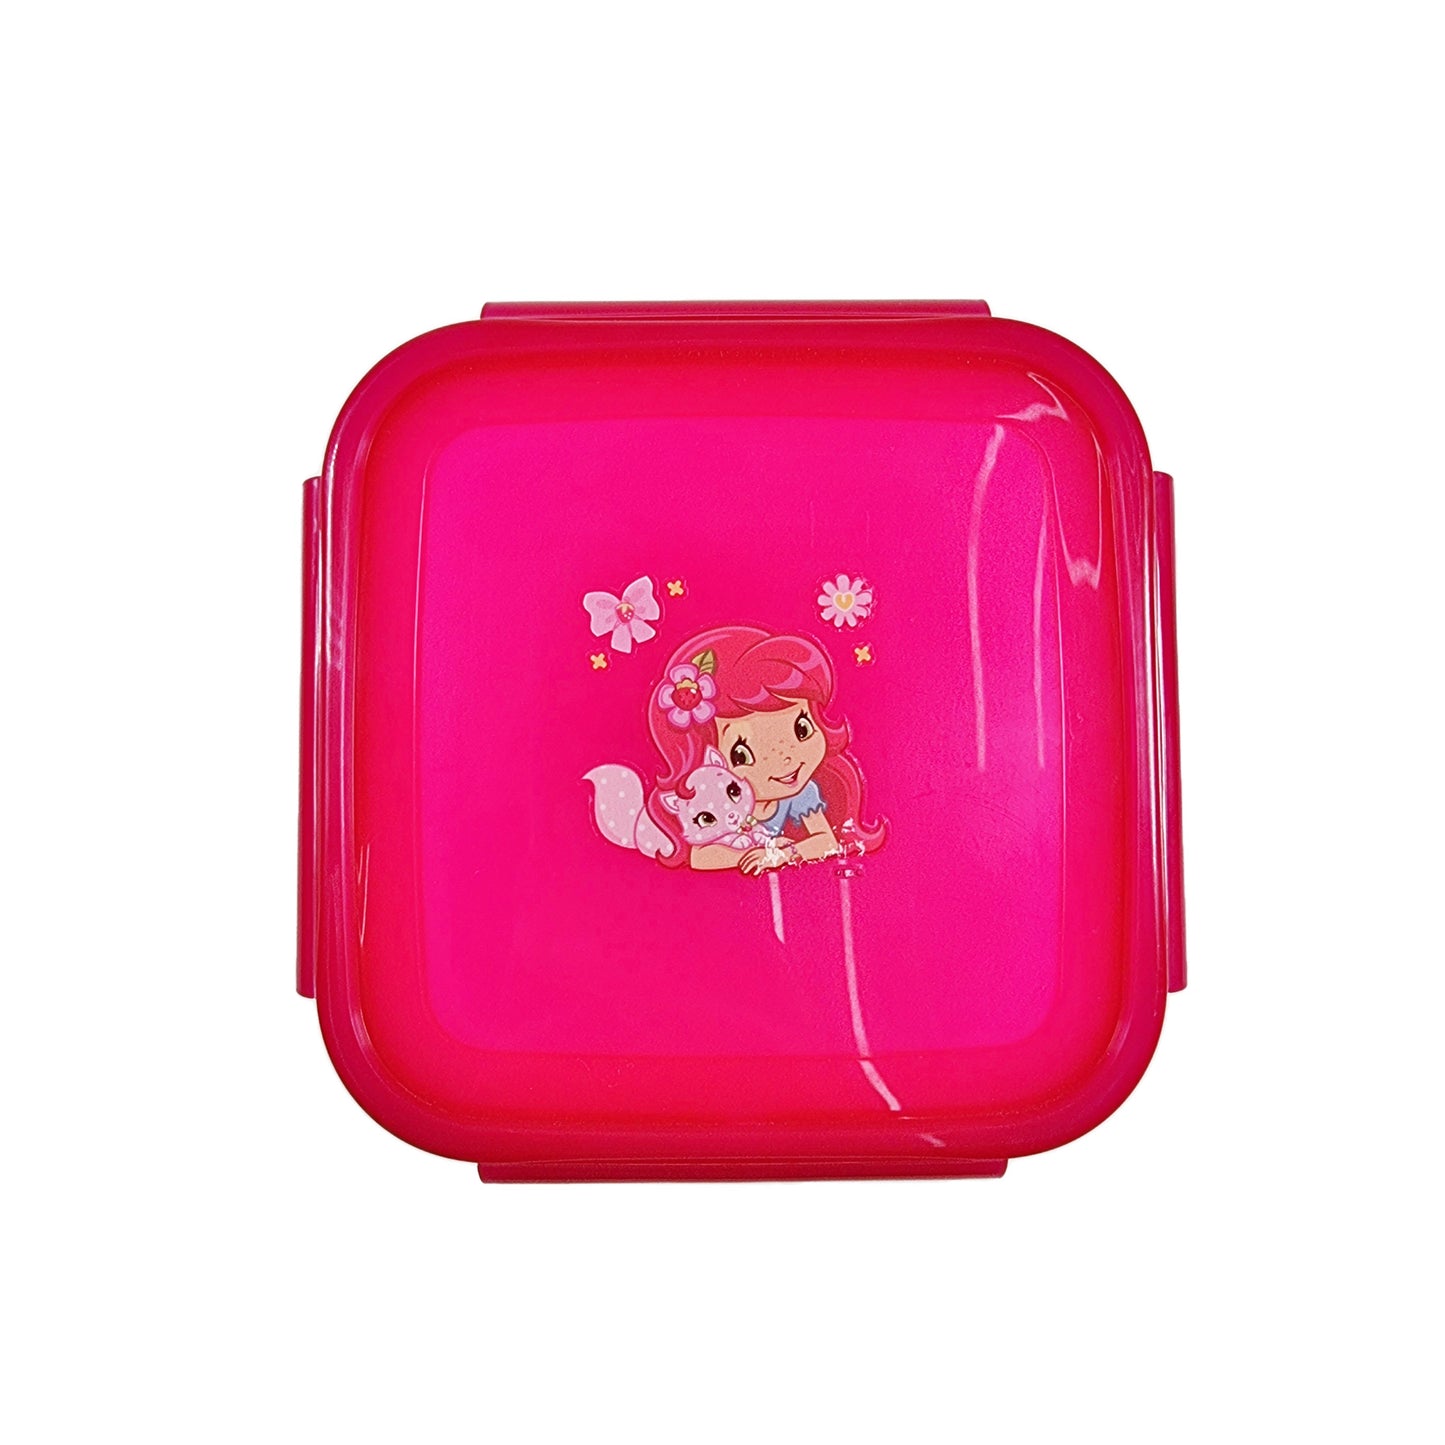 Strawberry Shortcake - Snap-lock Lunch Sandwich Box (500ml)